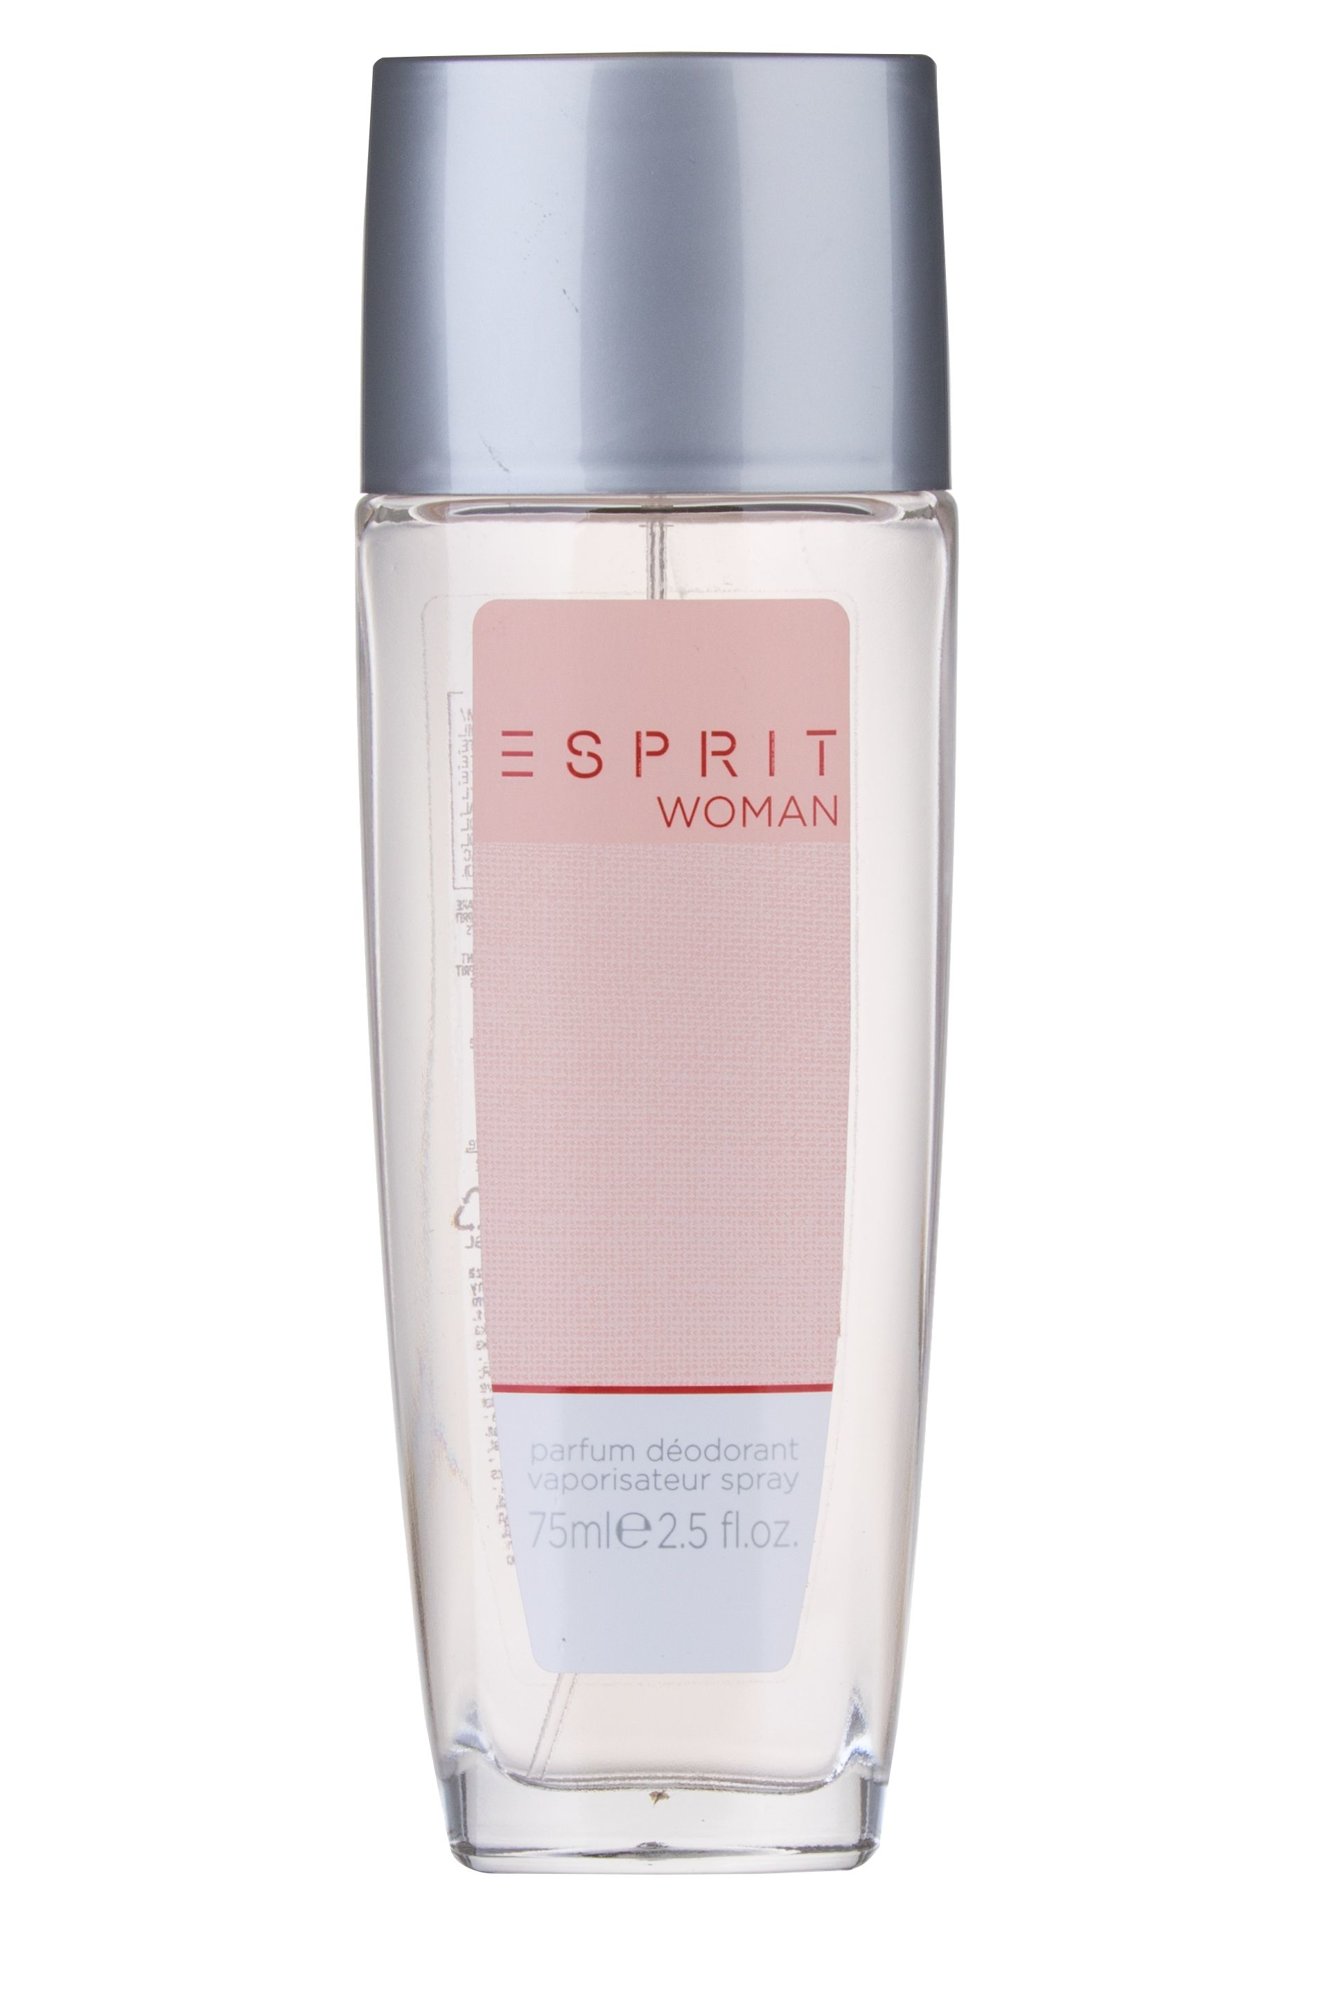 Esprit Esprit Woman 75ml dezodorantas